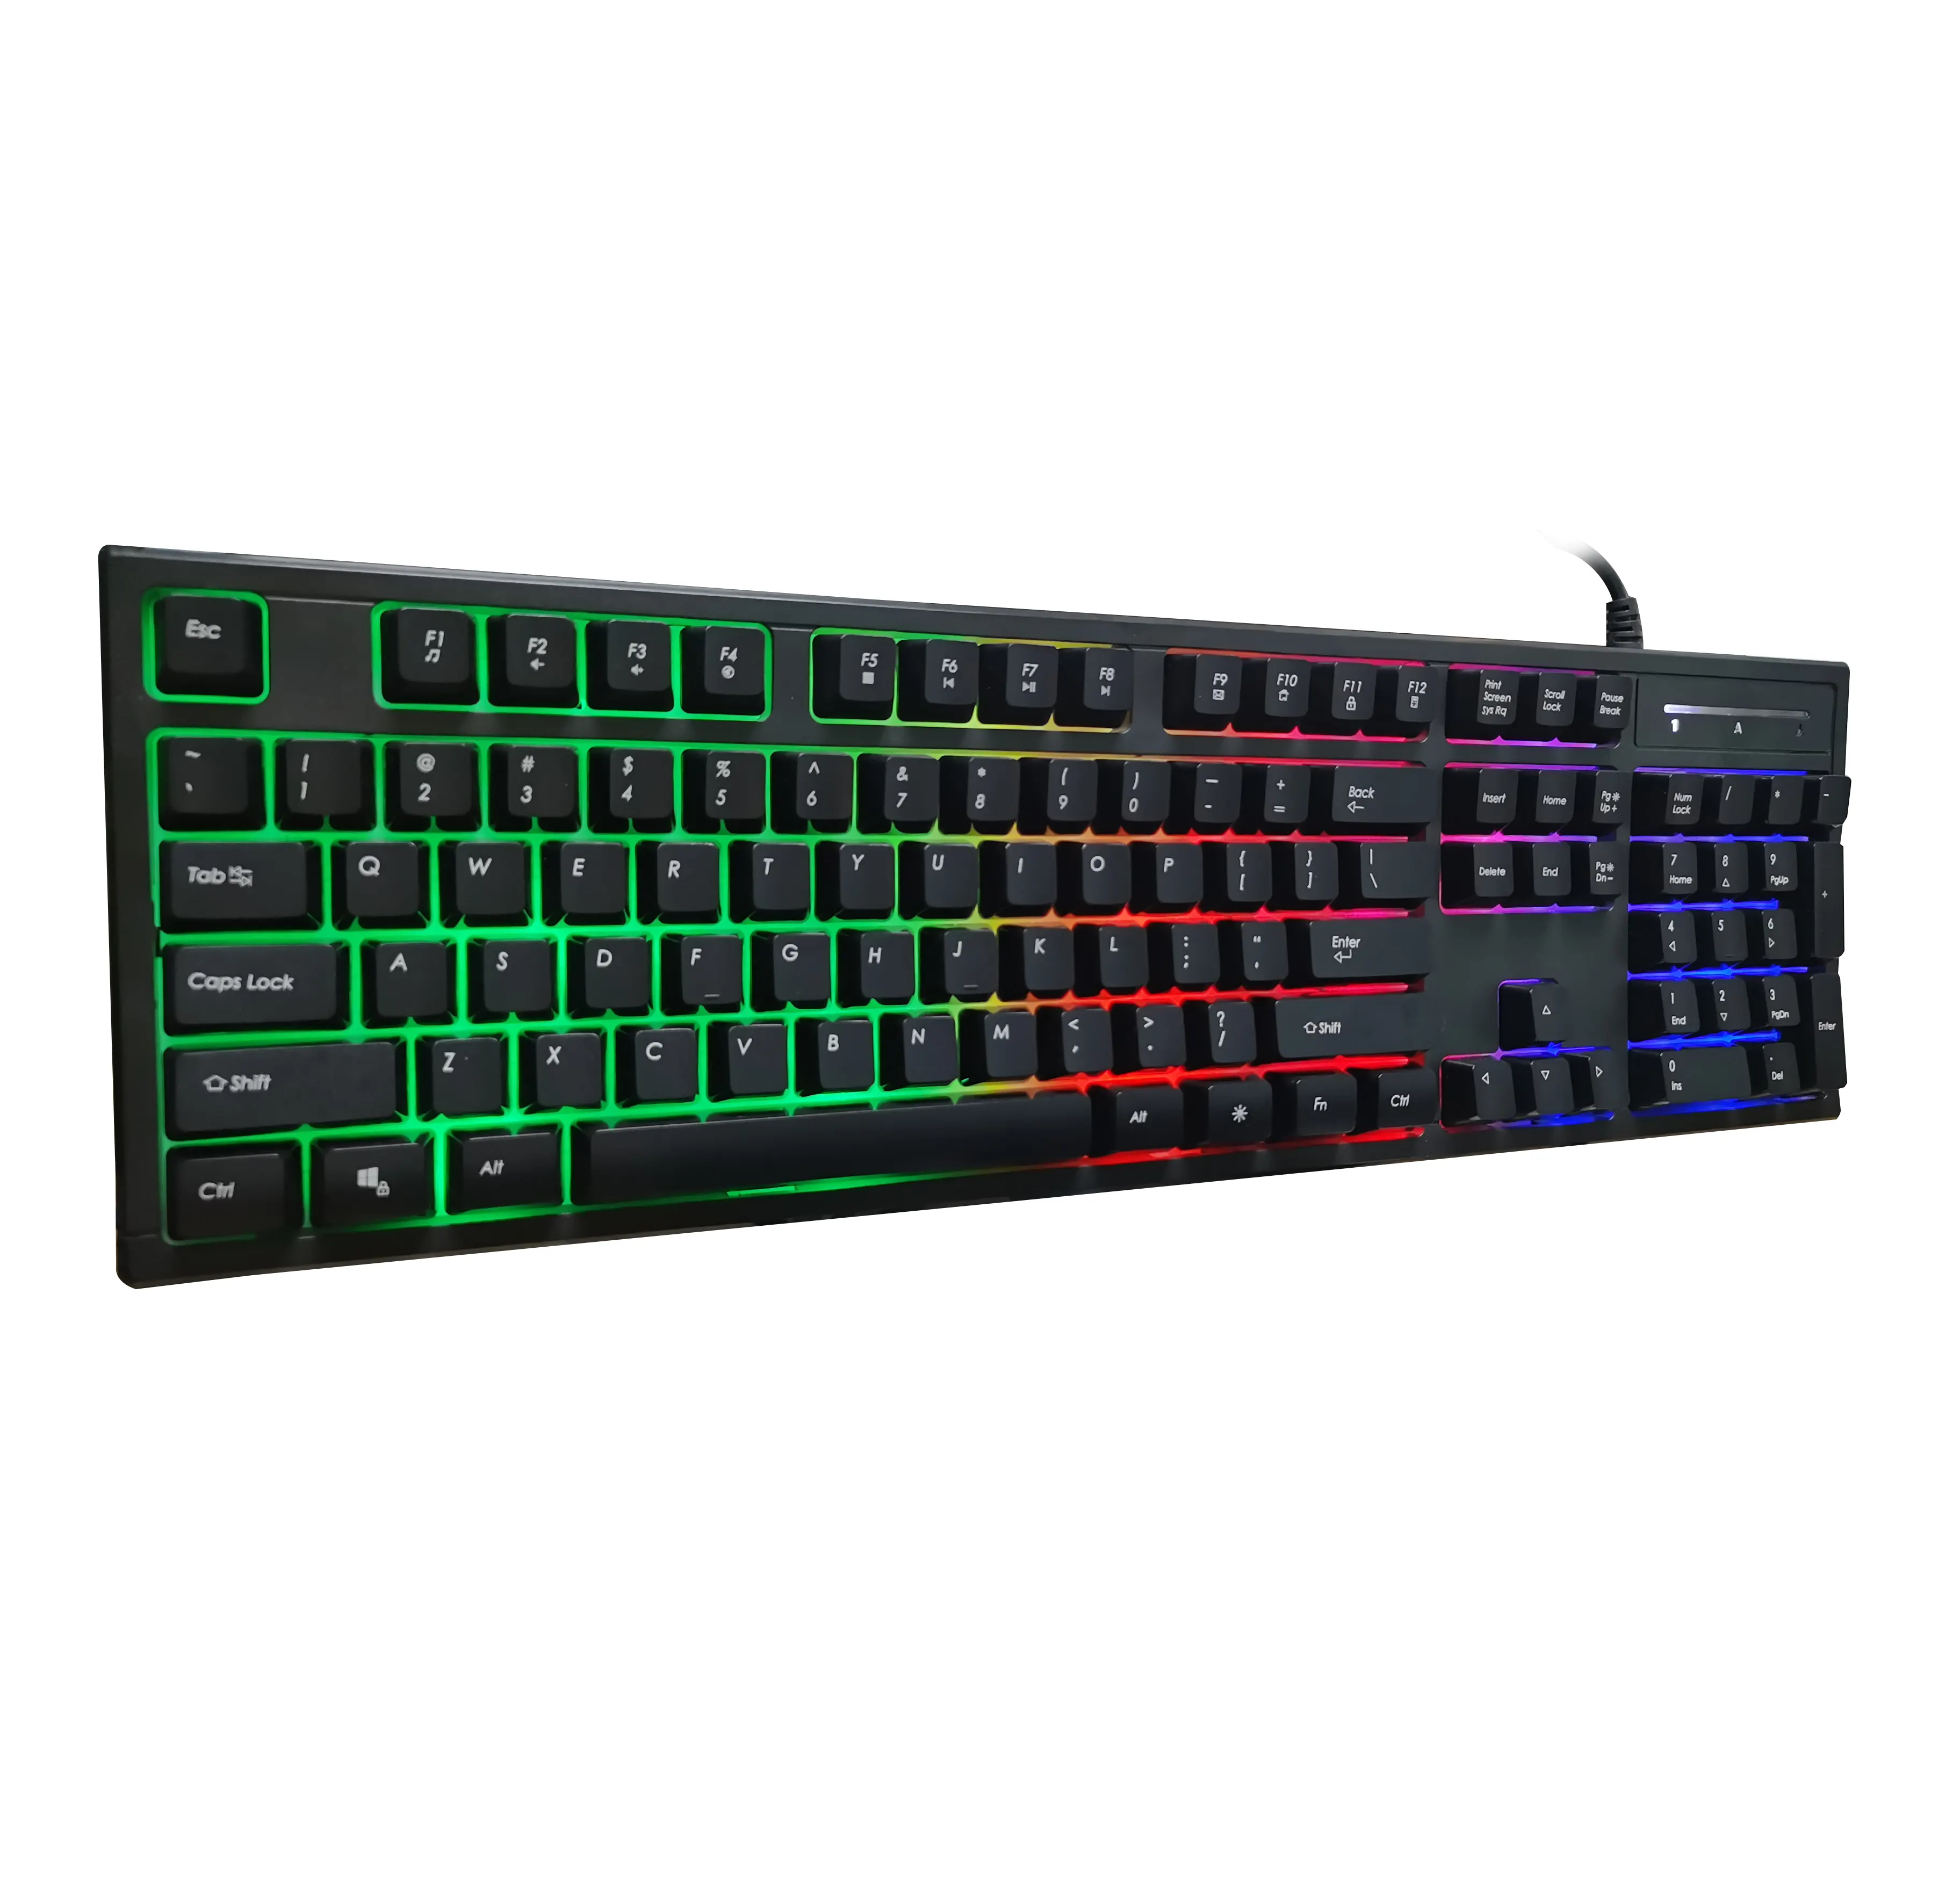 2021 Keyboard Back-light RGB Waterproof Professional Gaming Keyboard Wired 104 Keys with multimedia function